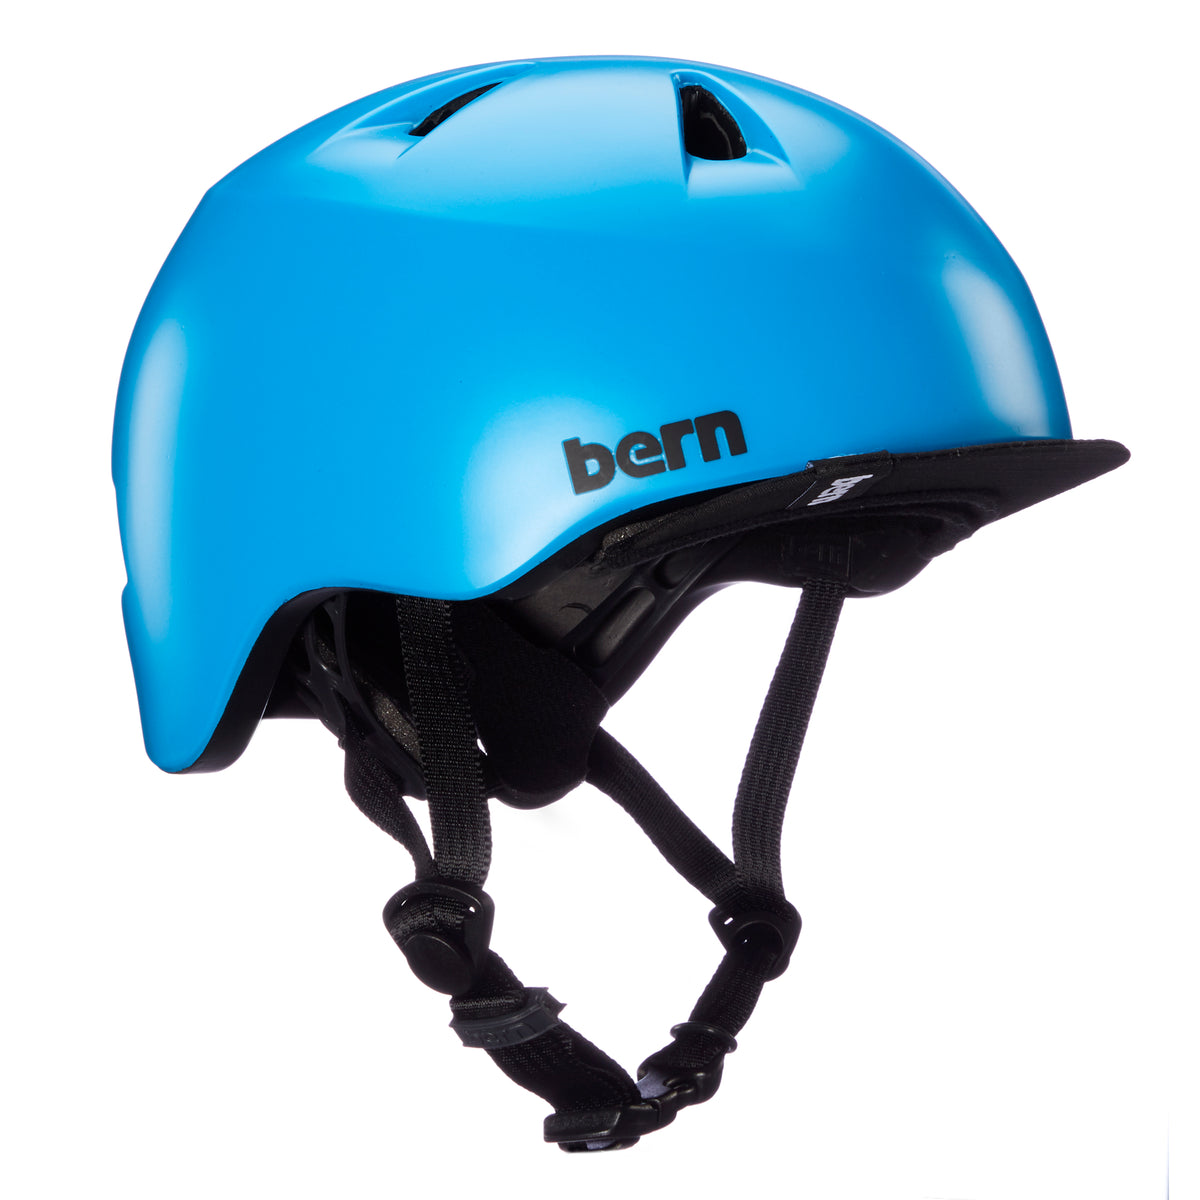 Tigre Bern Helmet